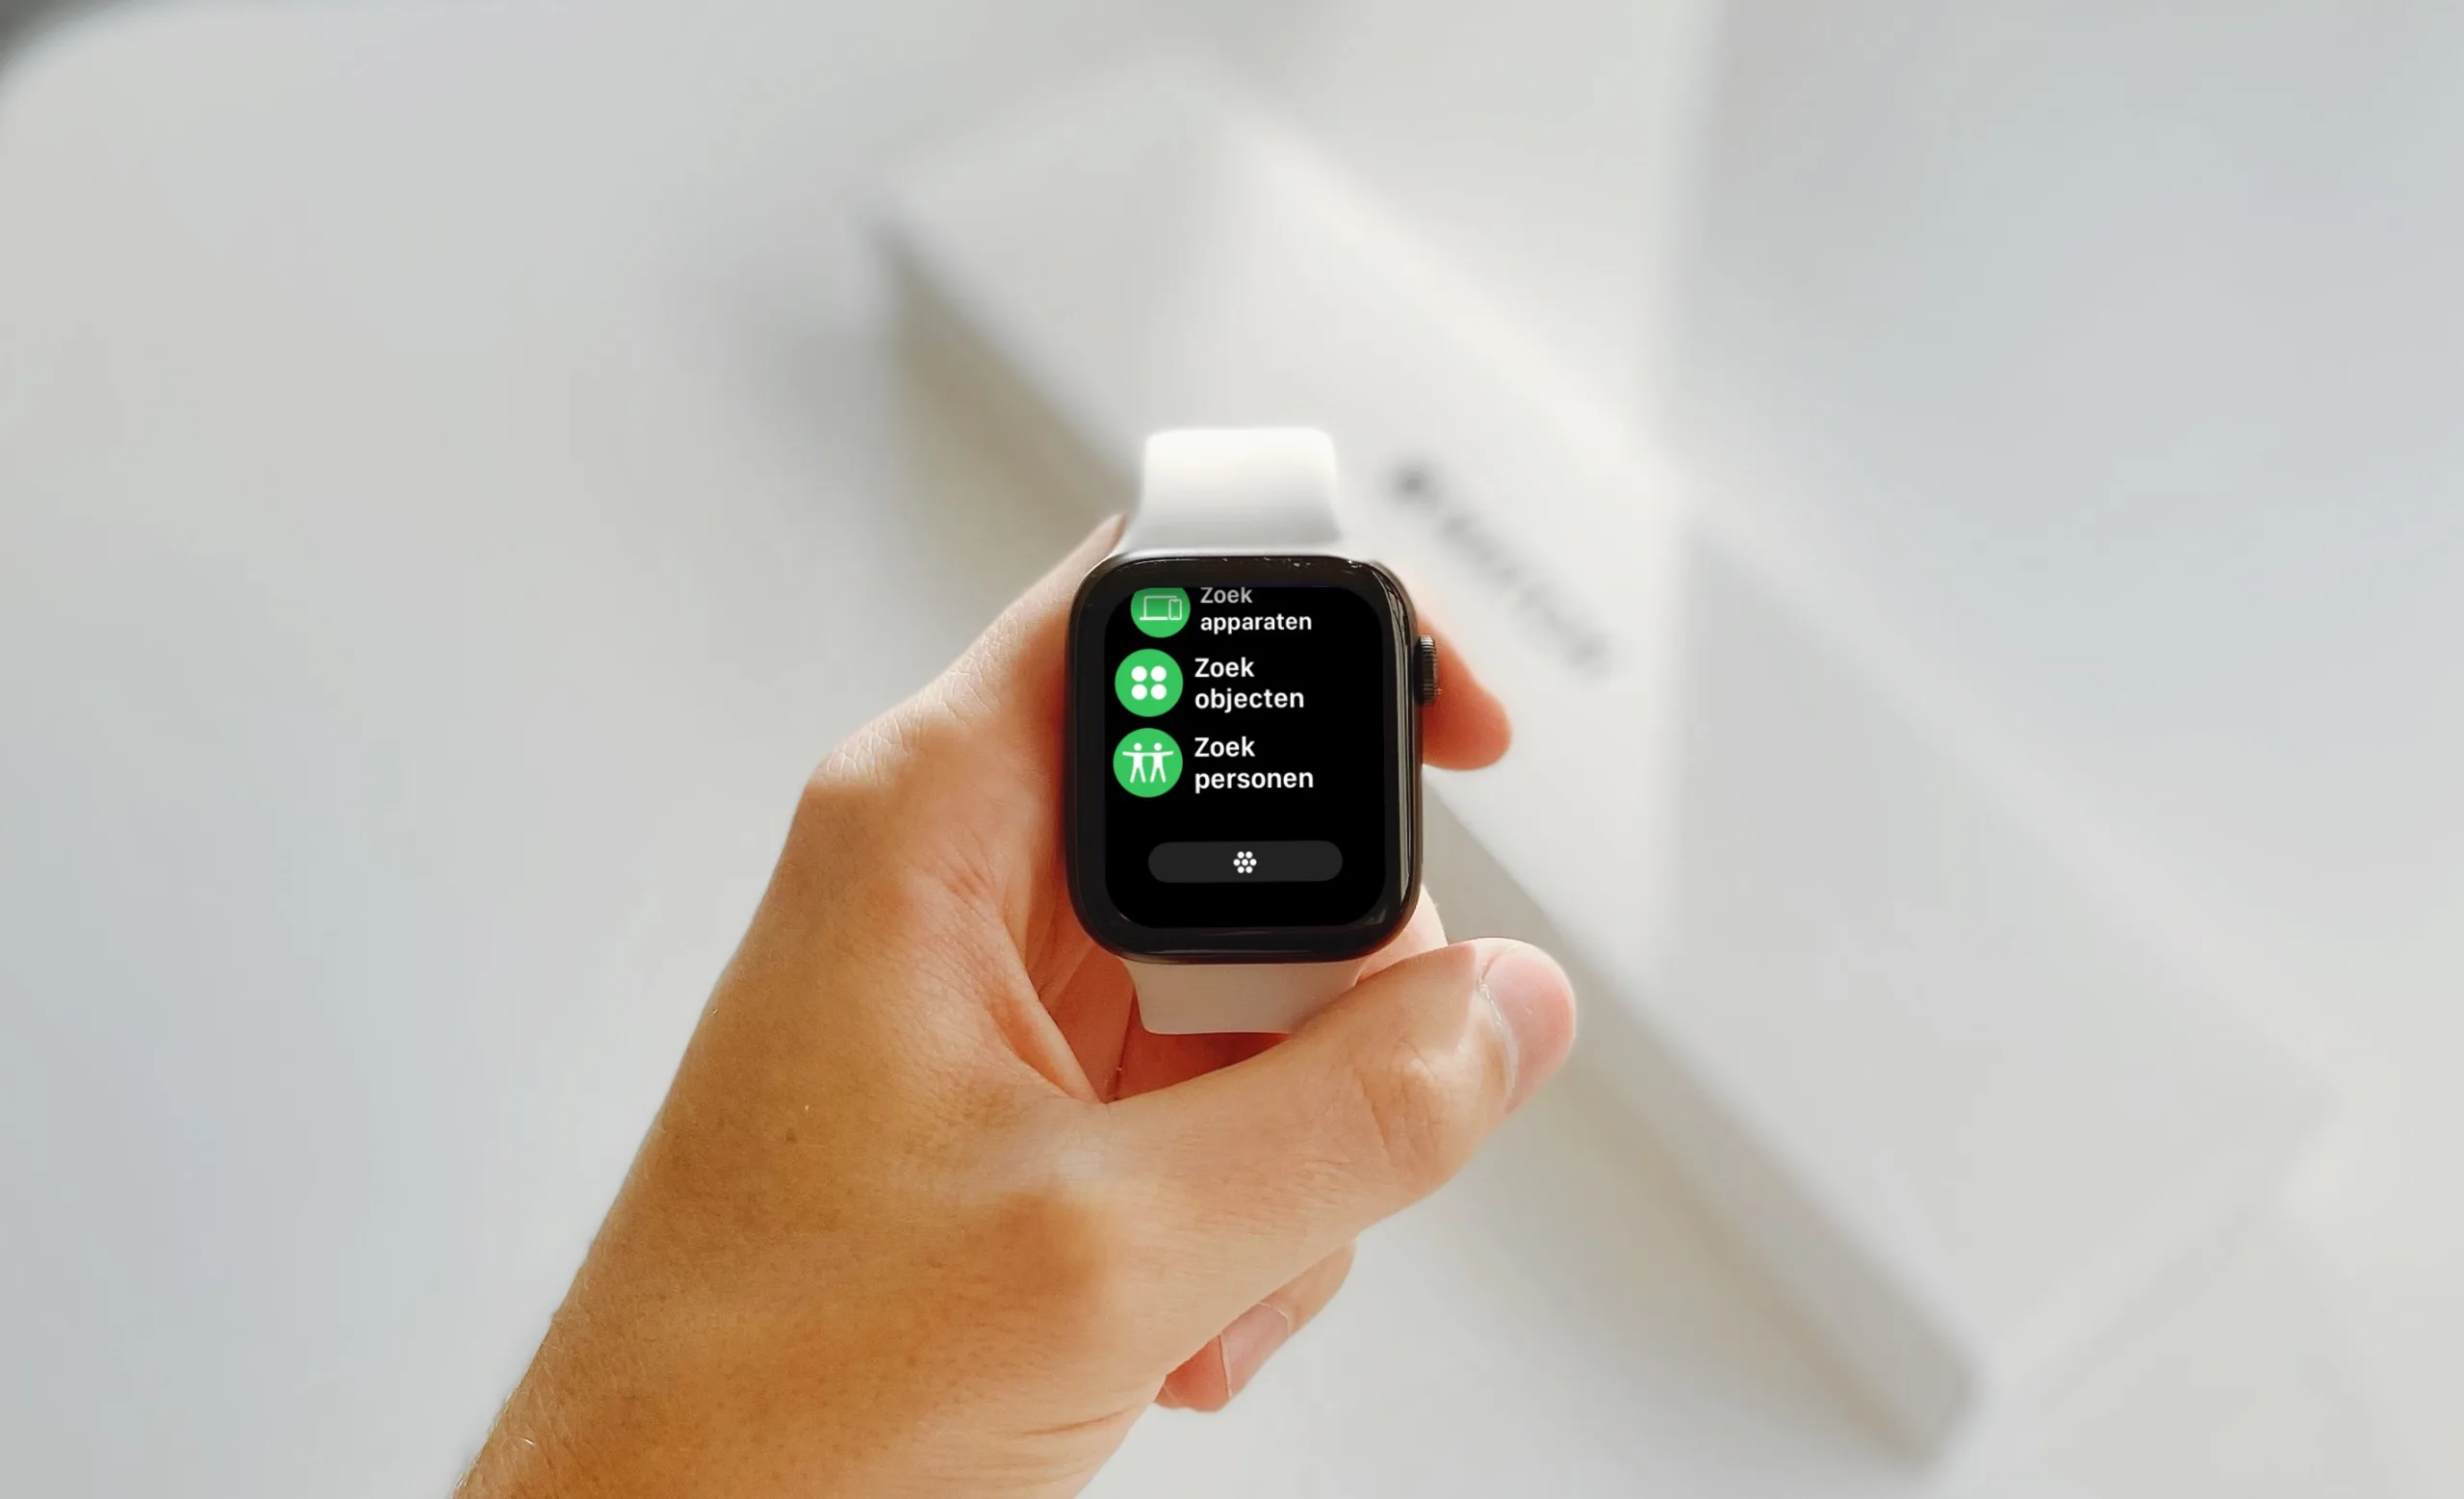 Apple Watch appweergave kiezen